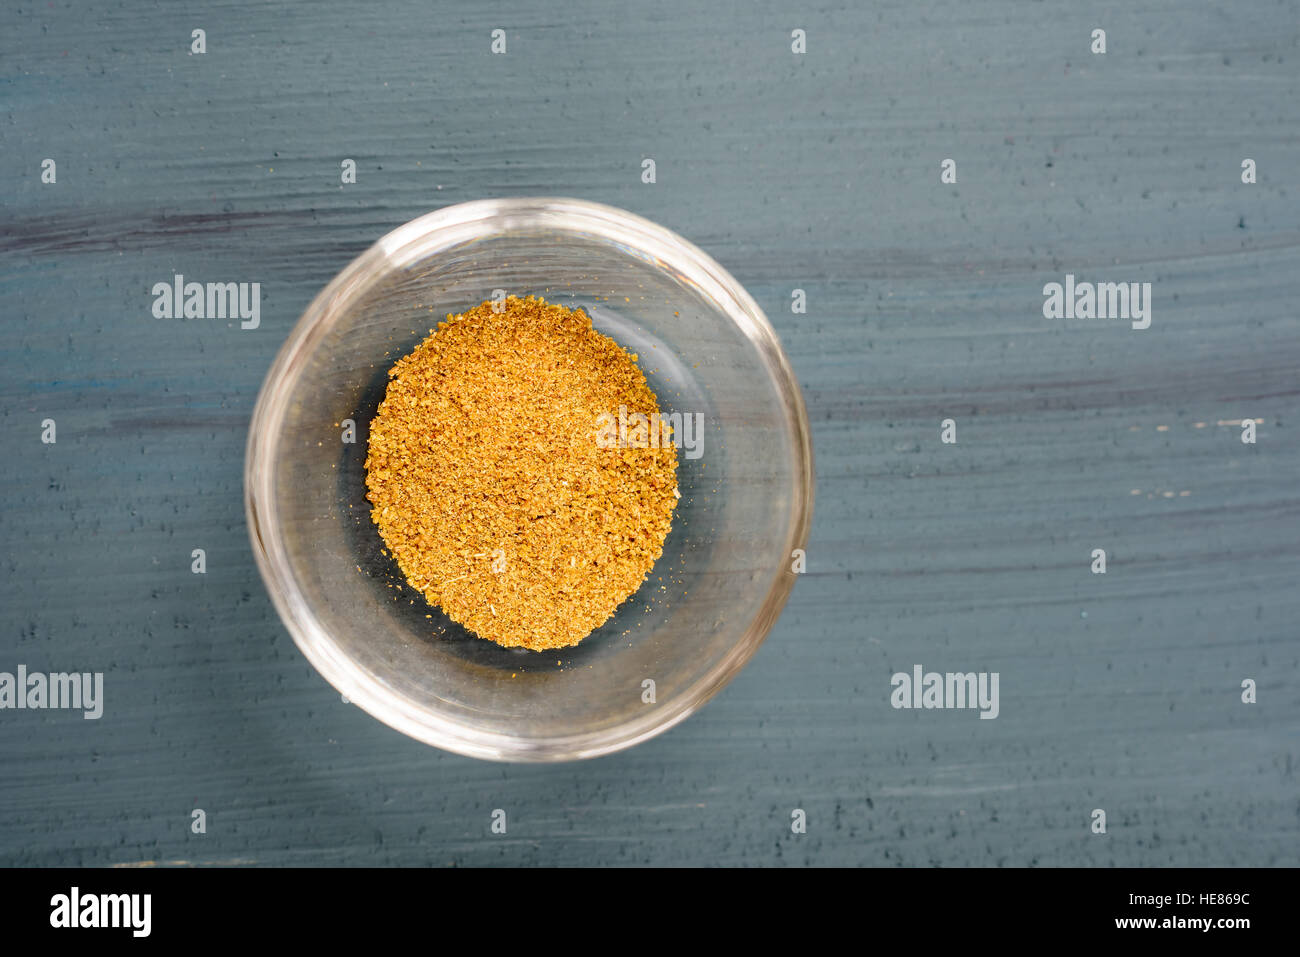 Cumin (Cuminum cyminum) Food Ingredient In Glass Bowl Stock Photo